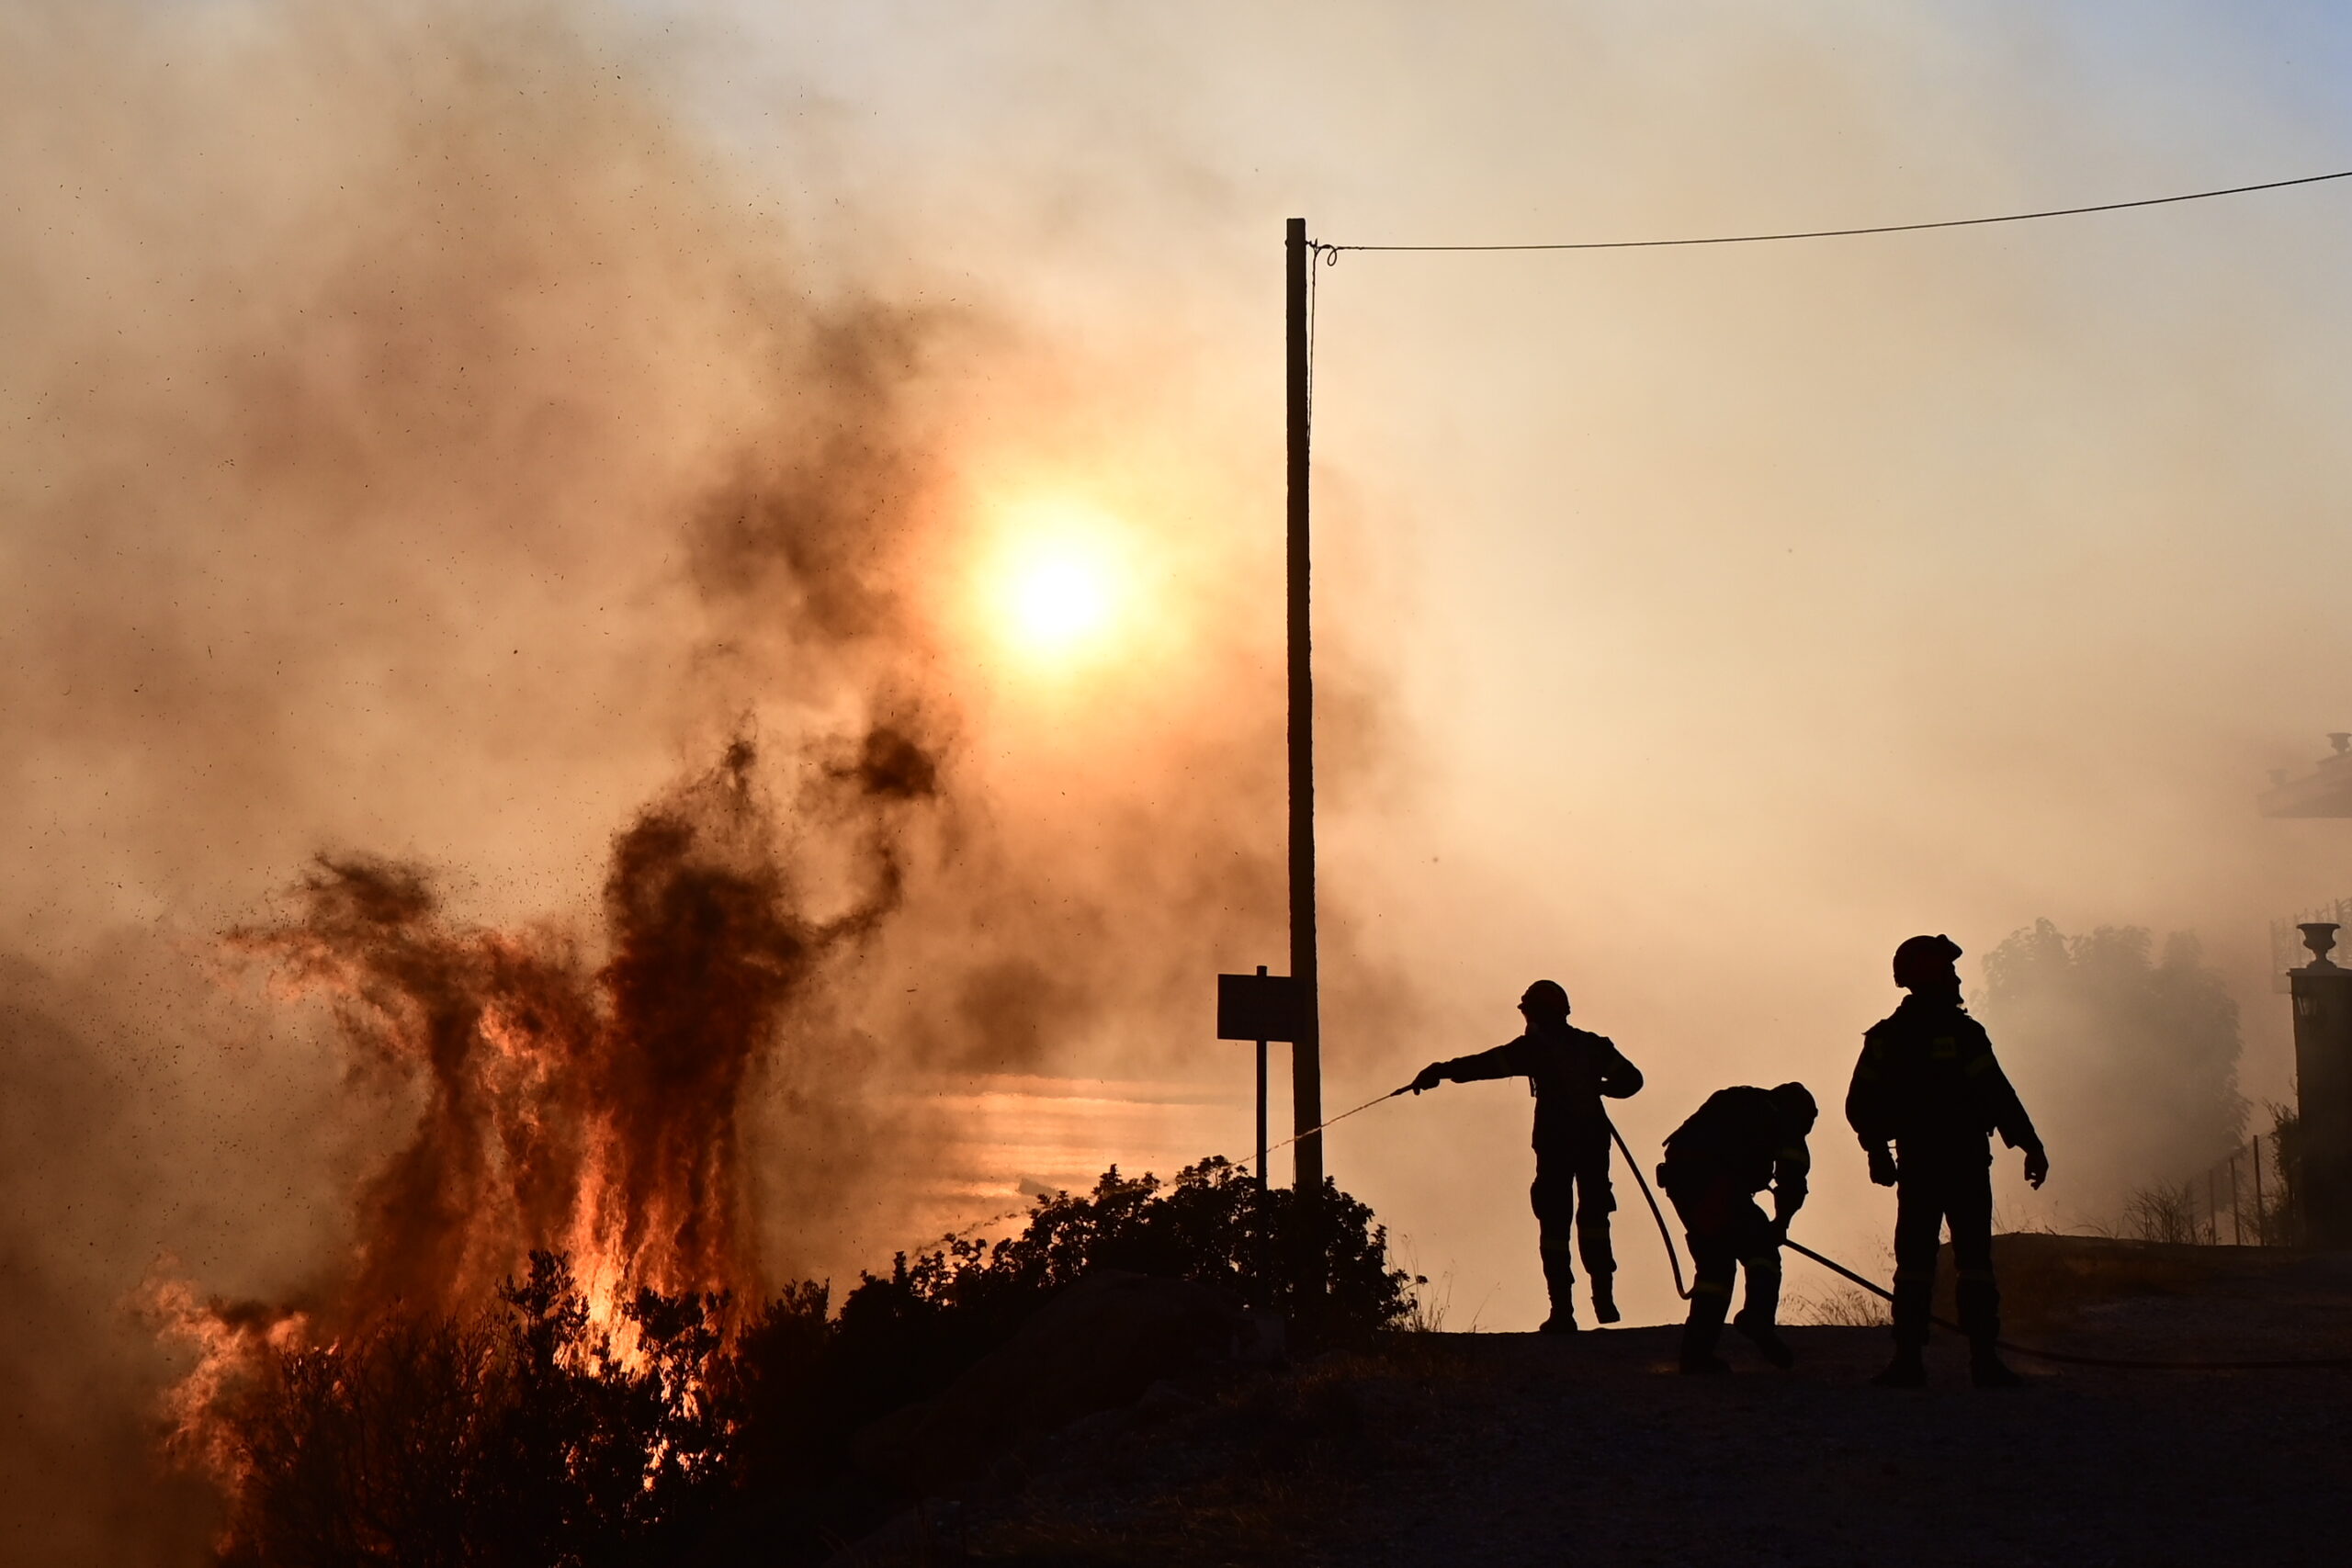 Live η ολονύχτια μάχη με τις φλόγες στην Αττική – Αγωνία για την Πάρνηθα από το μέτωπο στα Δερβενοχώρια